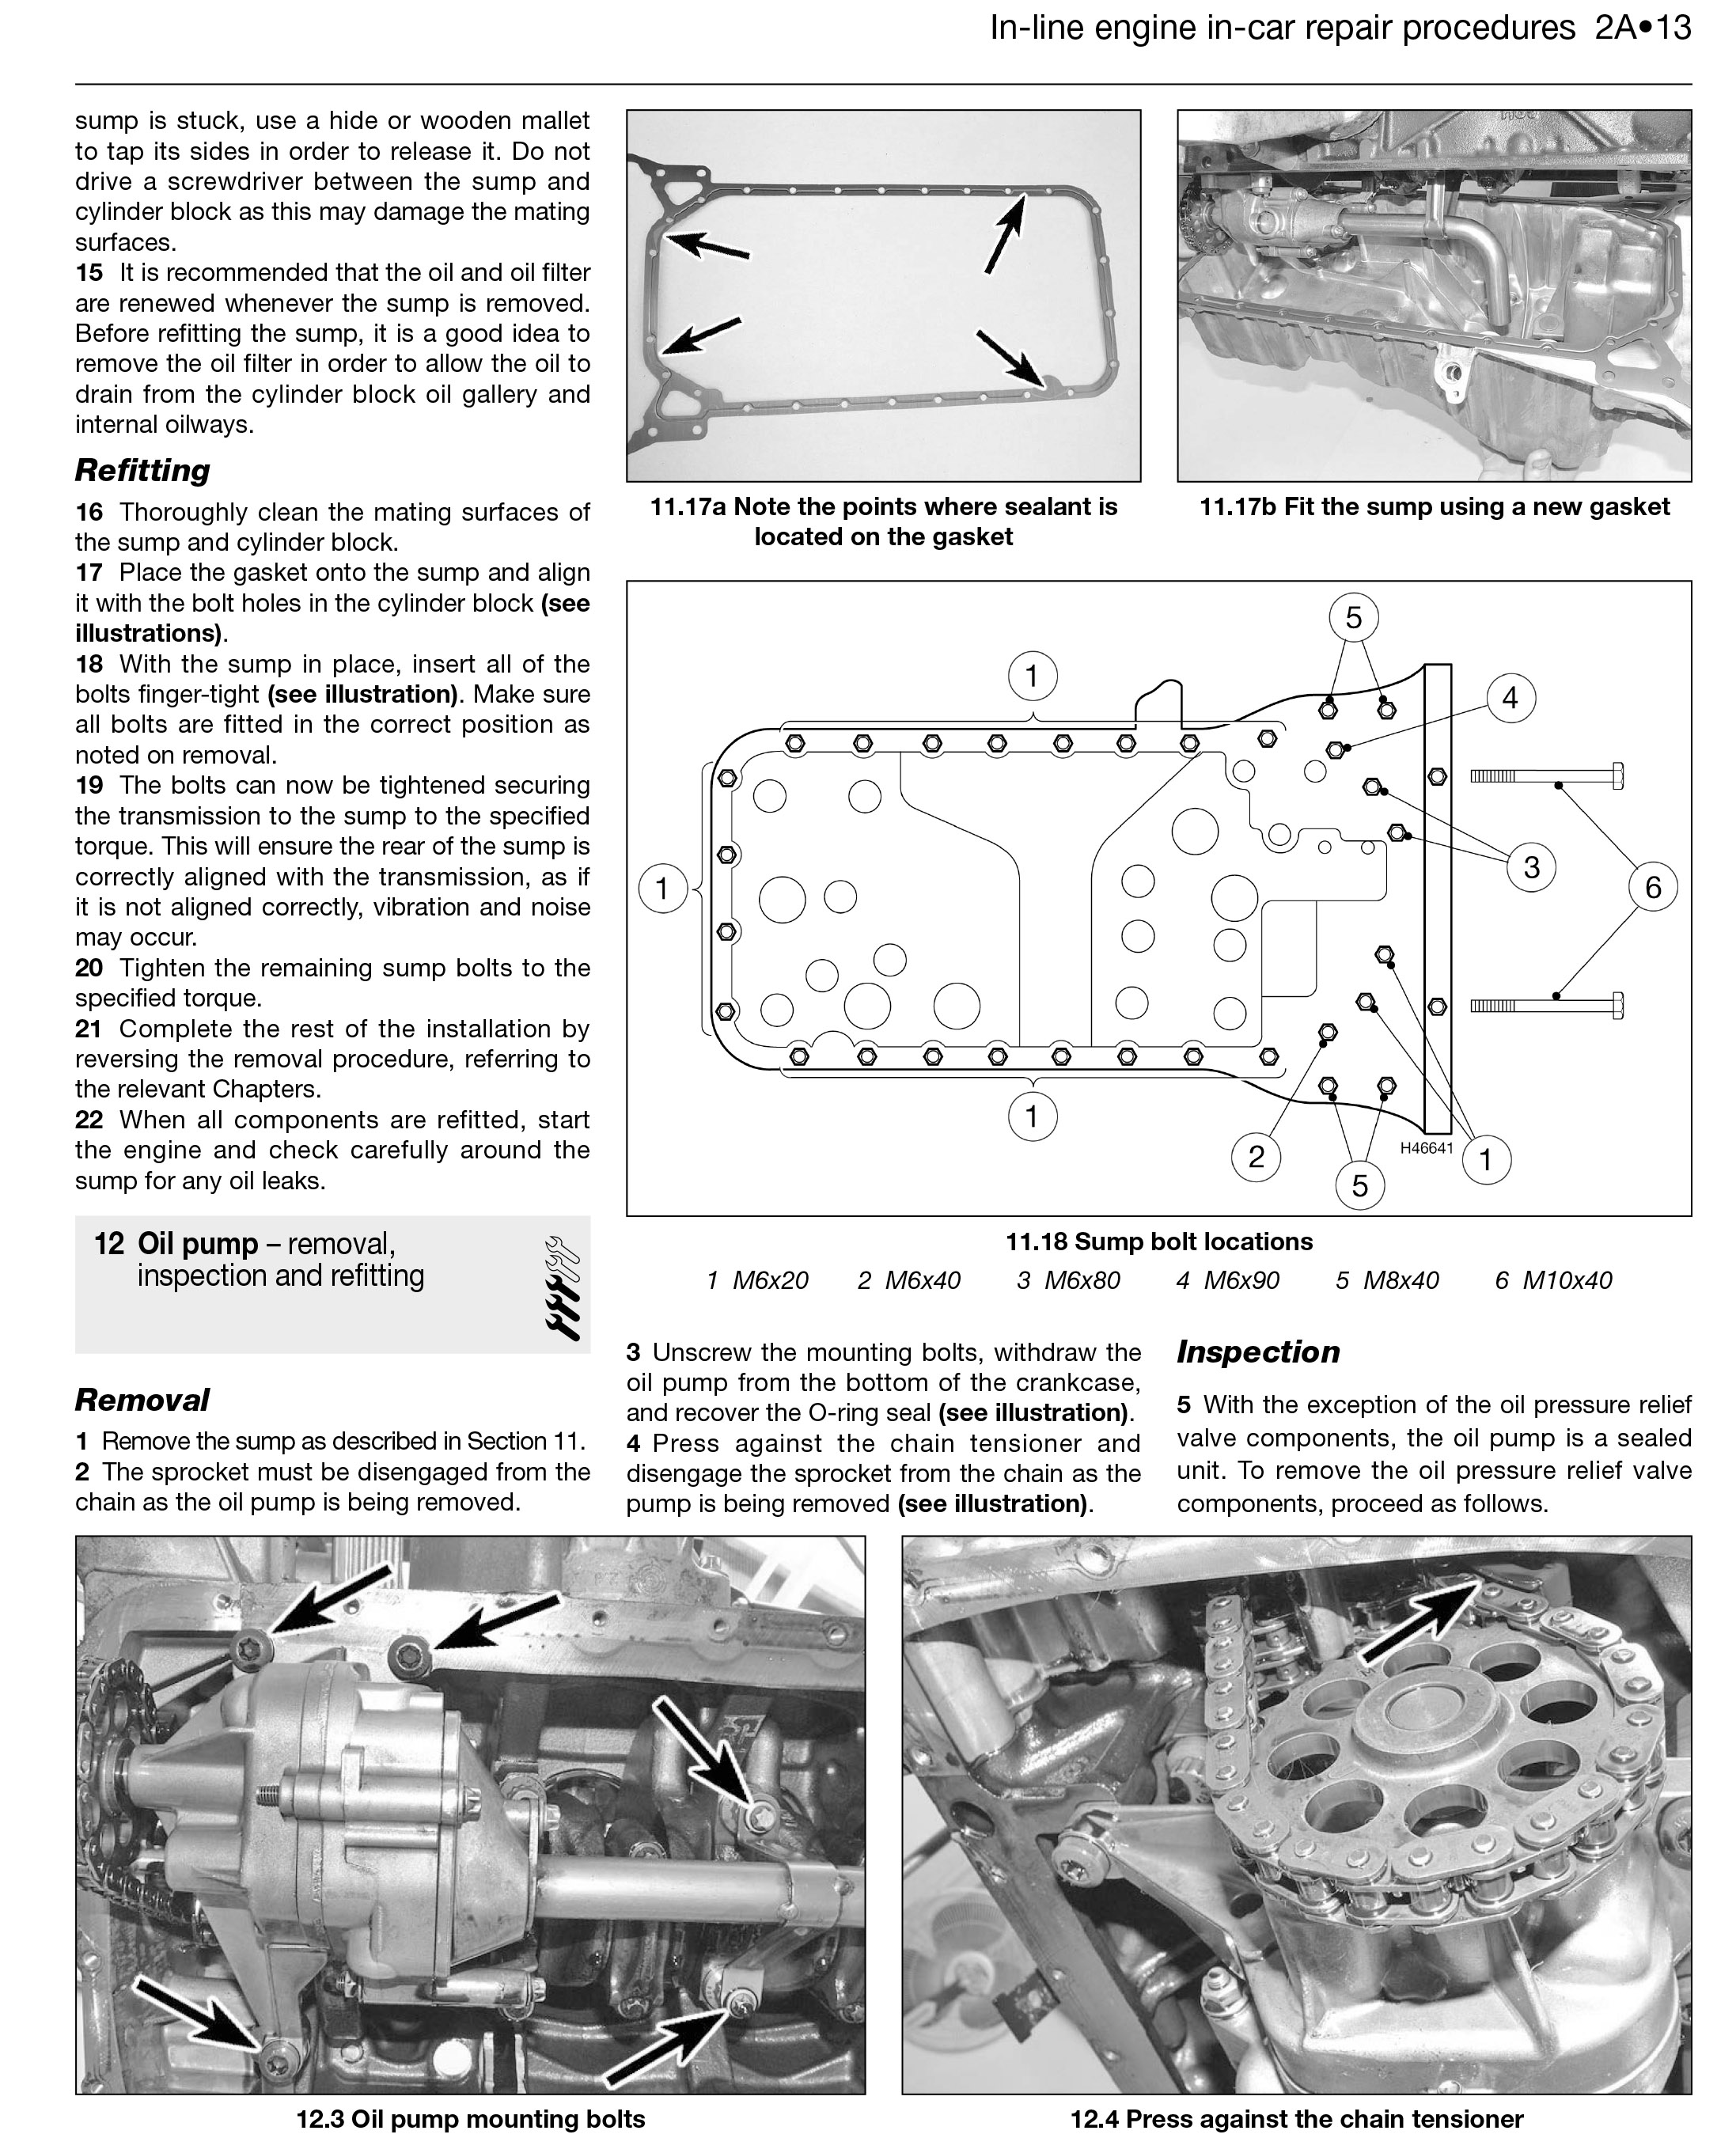 haynes abs manual pdf free download